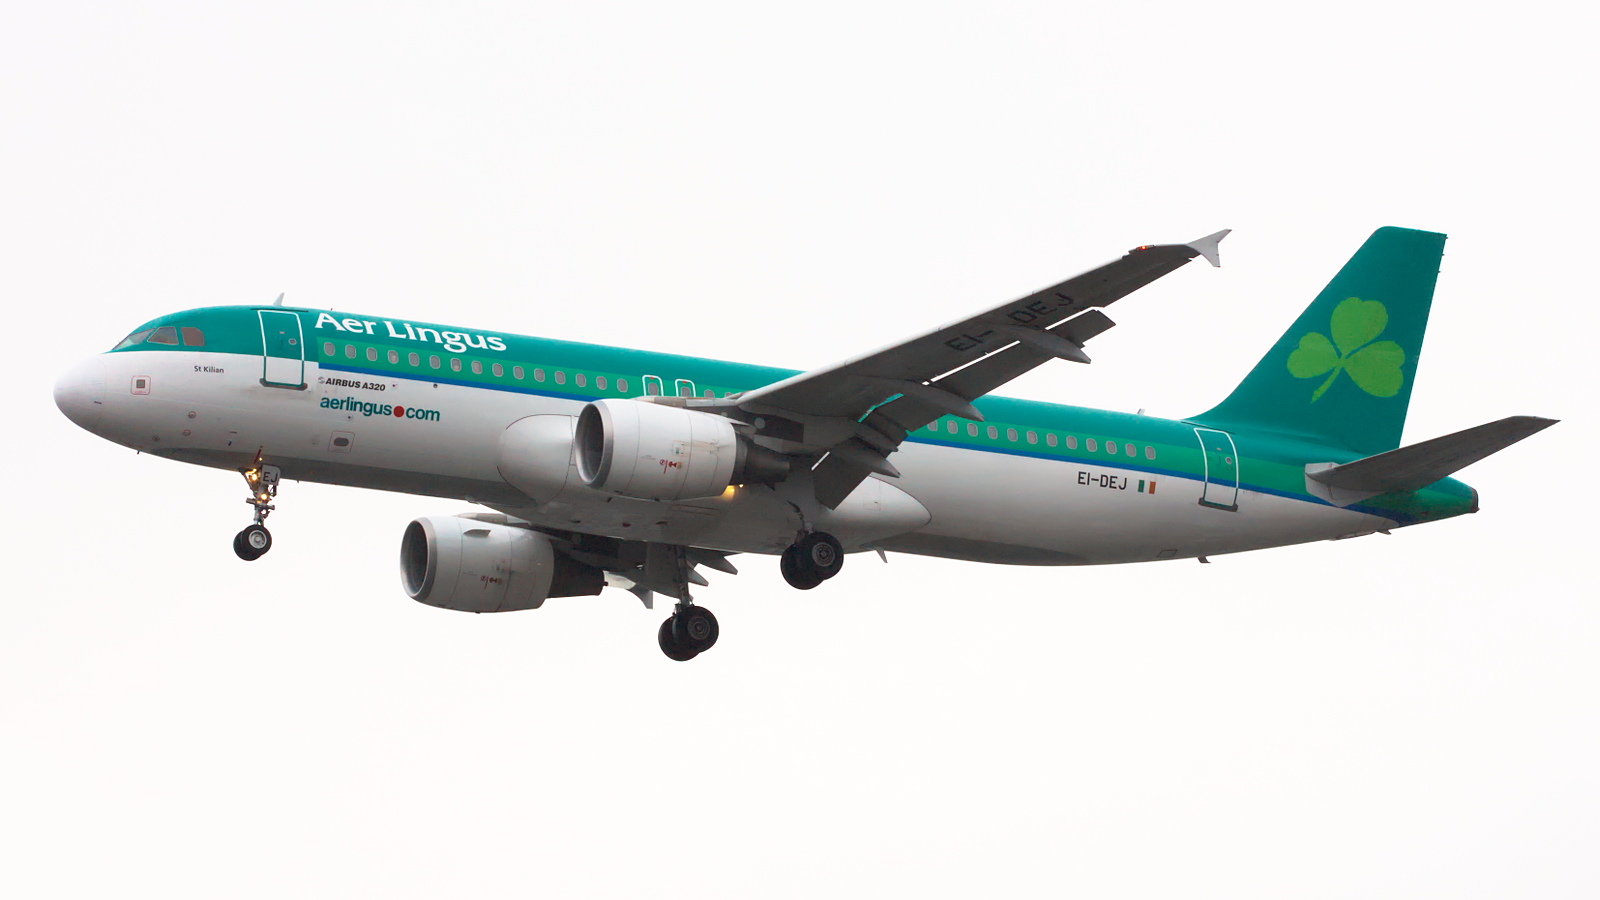 EI-DEJ ✈ Aer Lingus Airbus A320-214 @ London-Heathrow